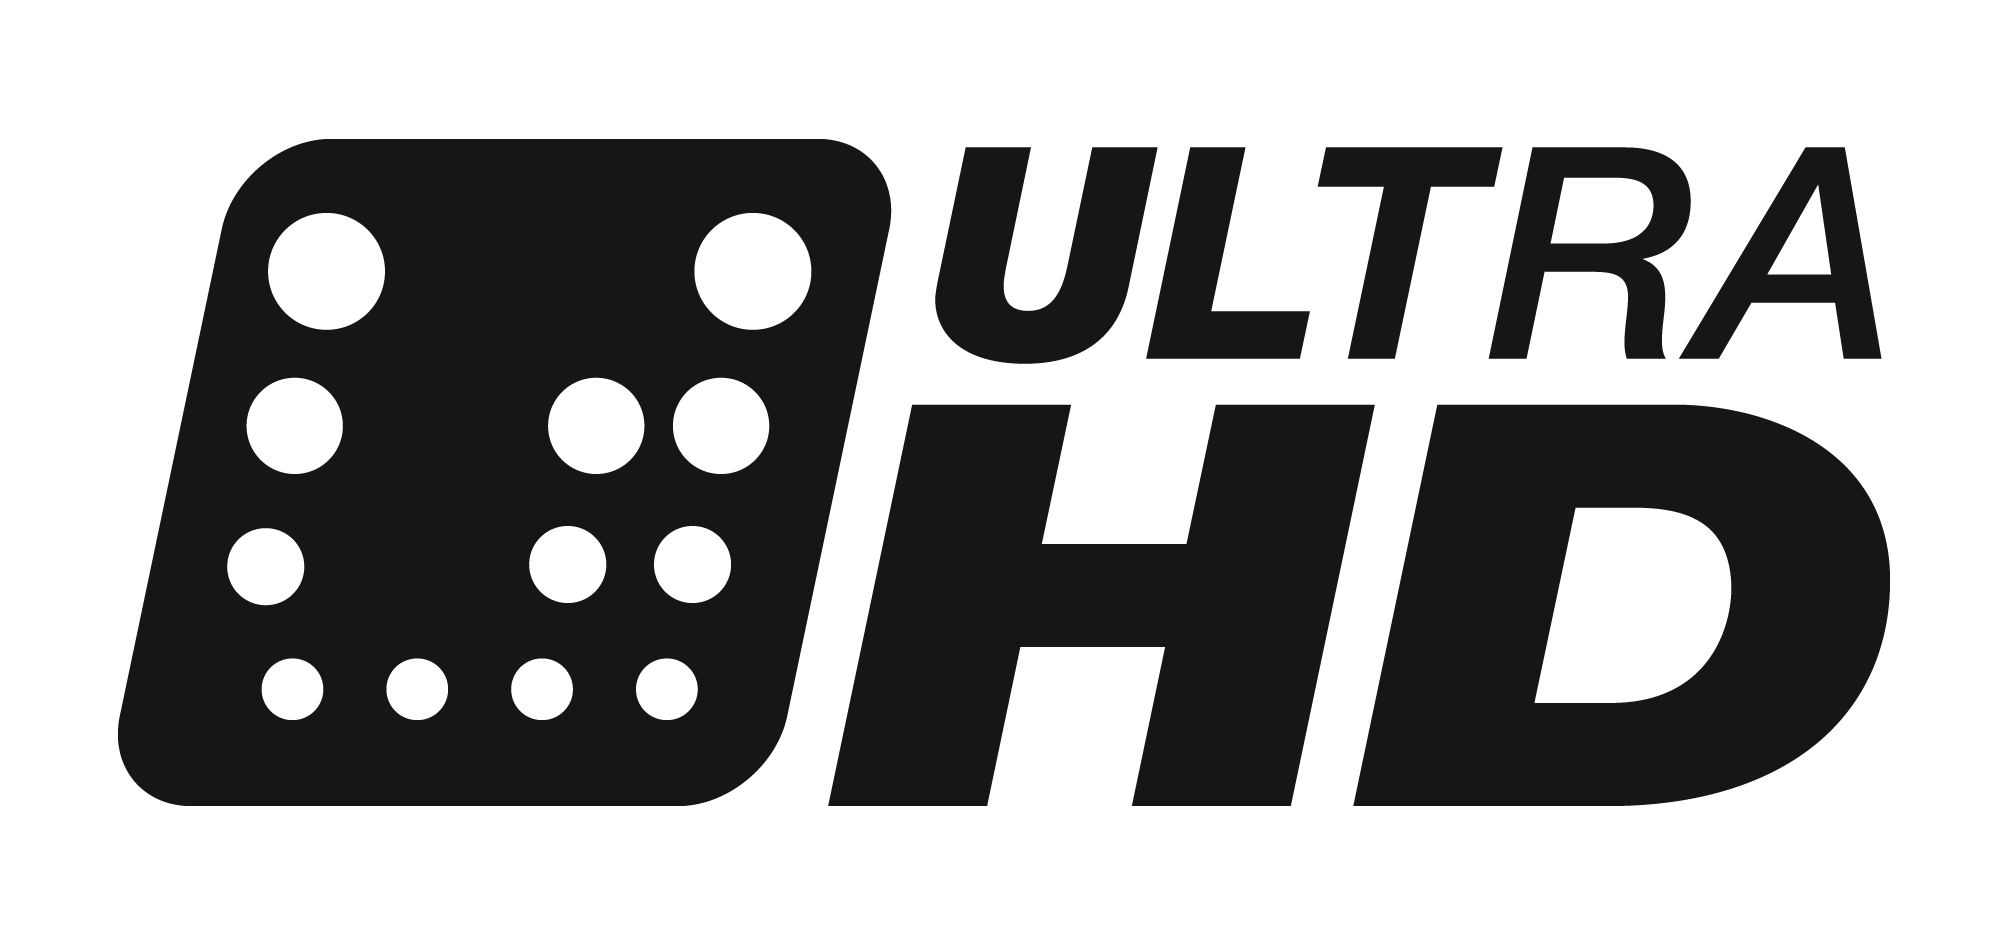 hd logo image 01